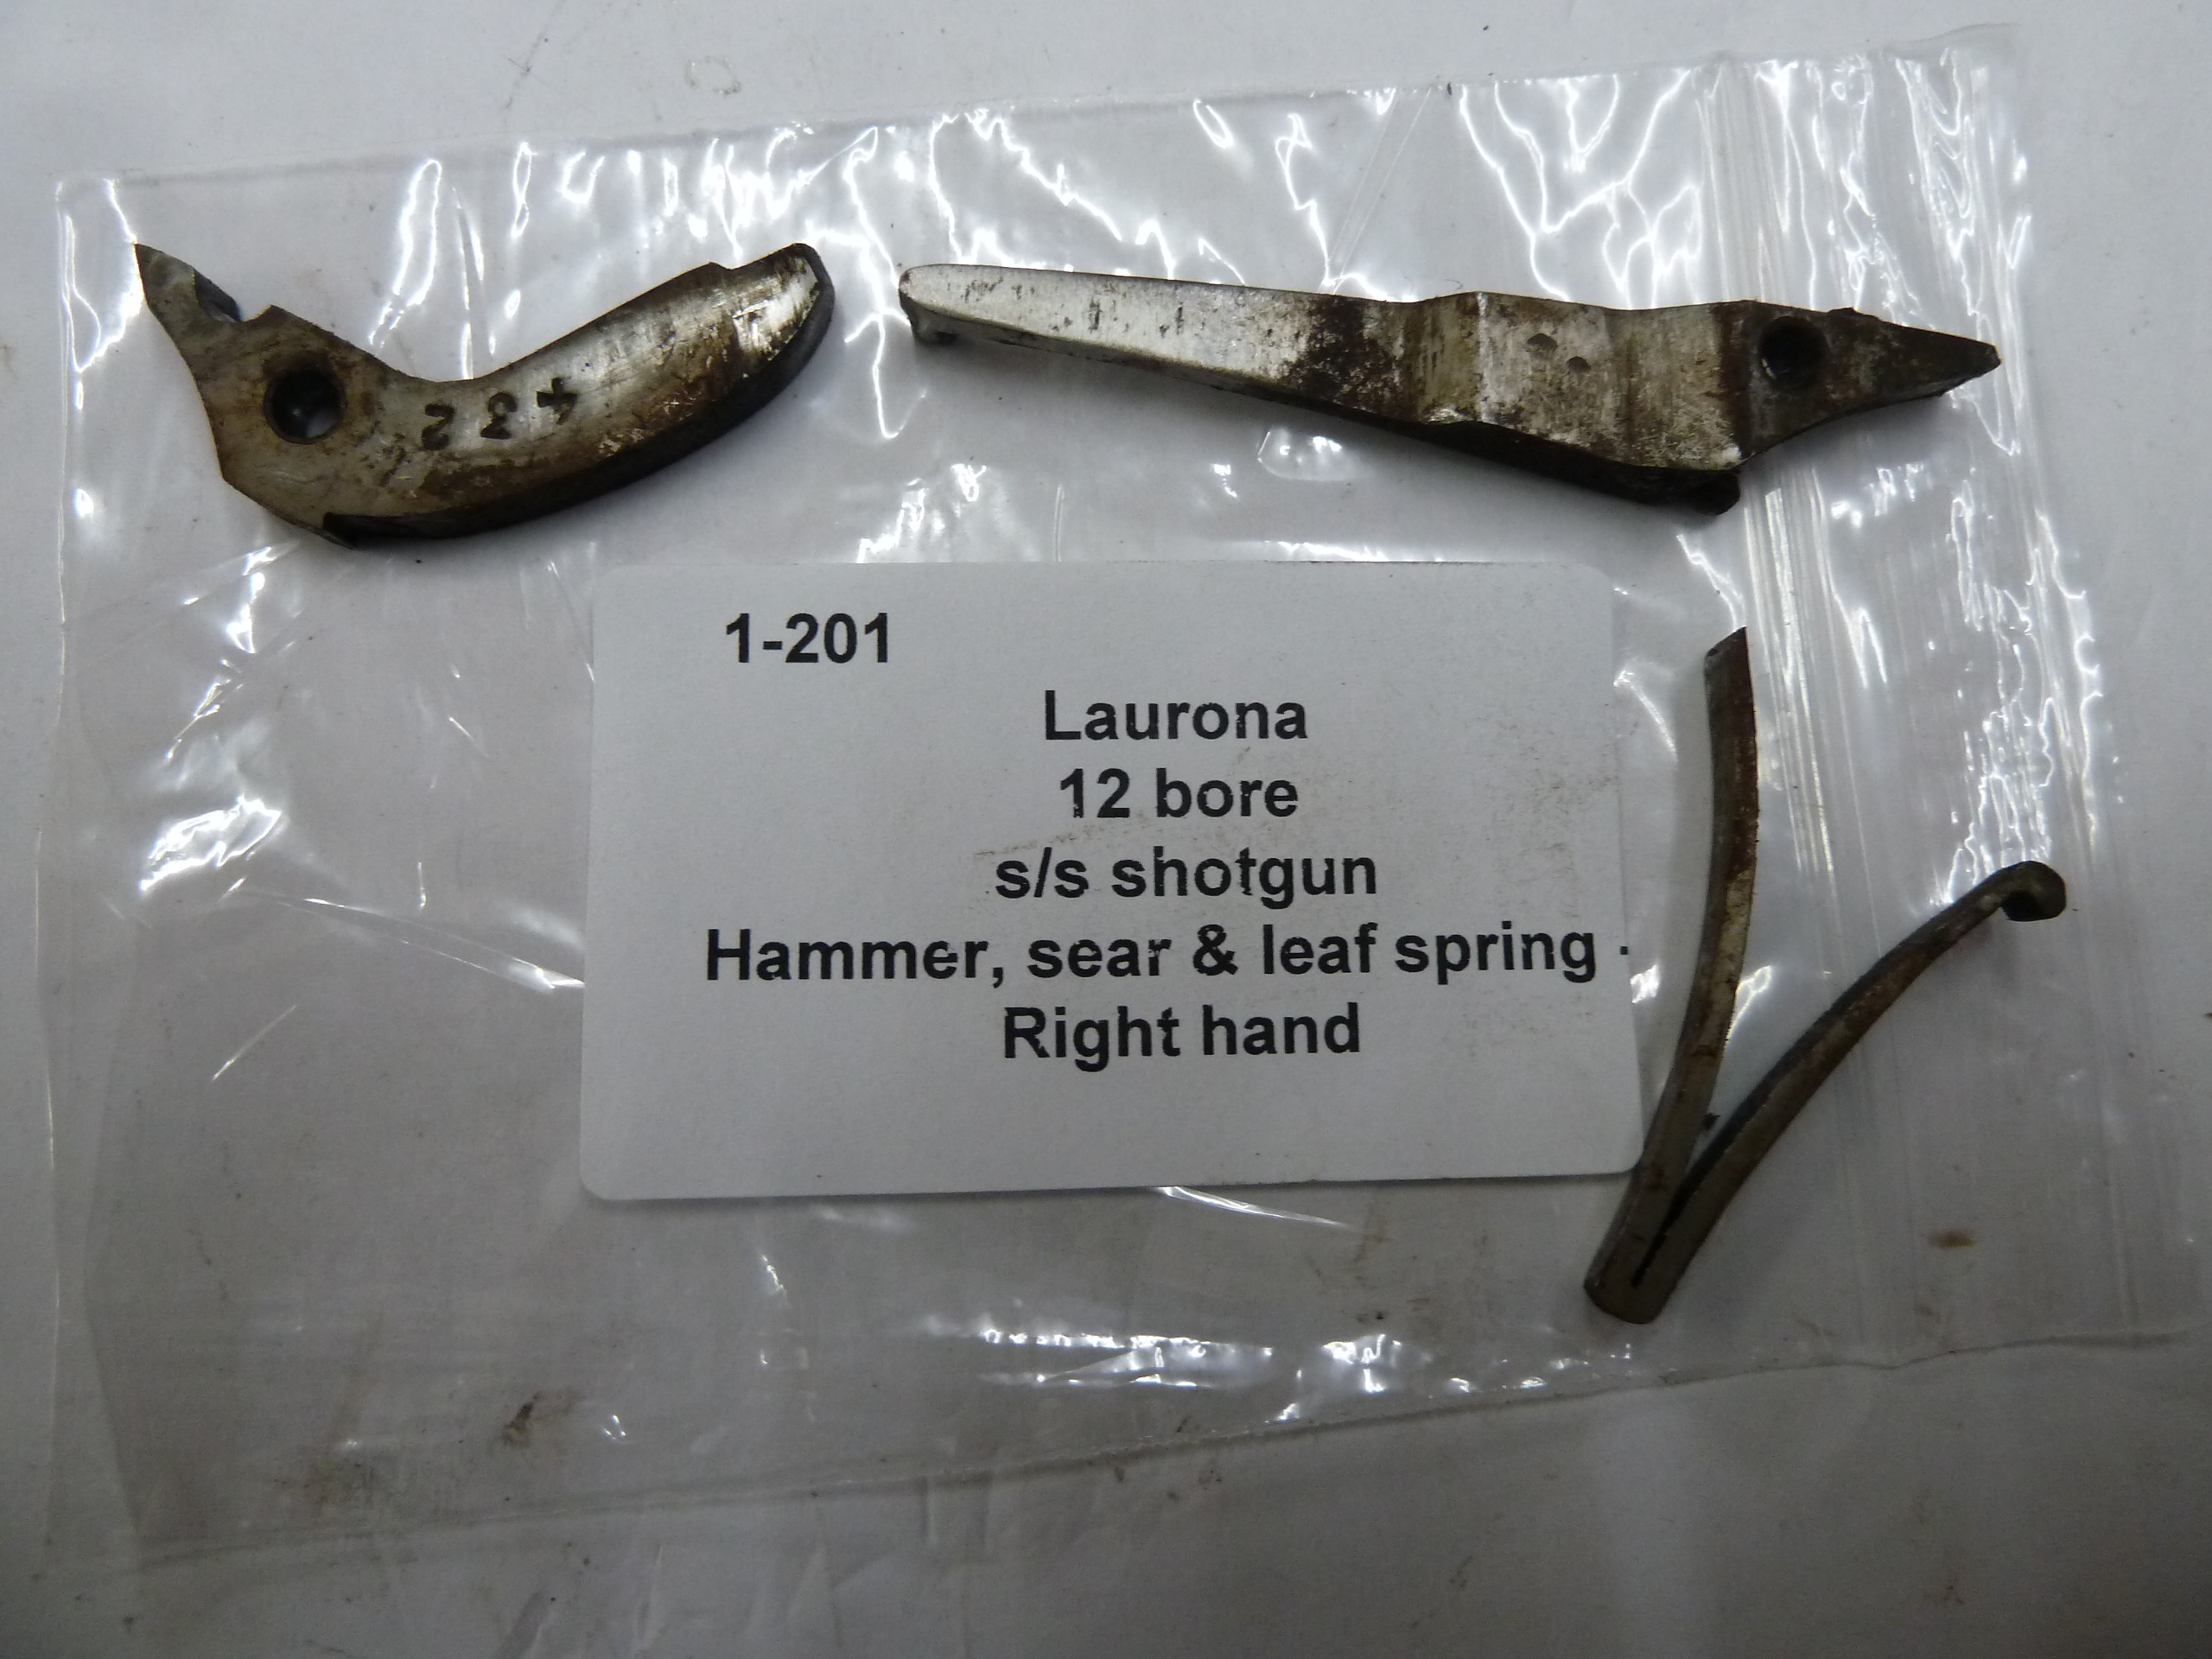 Laurona hammer right hand